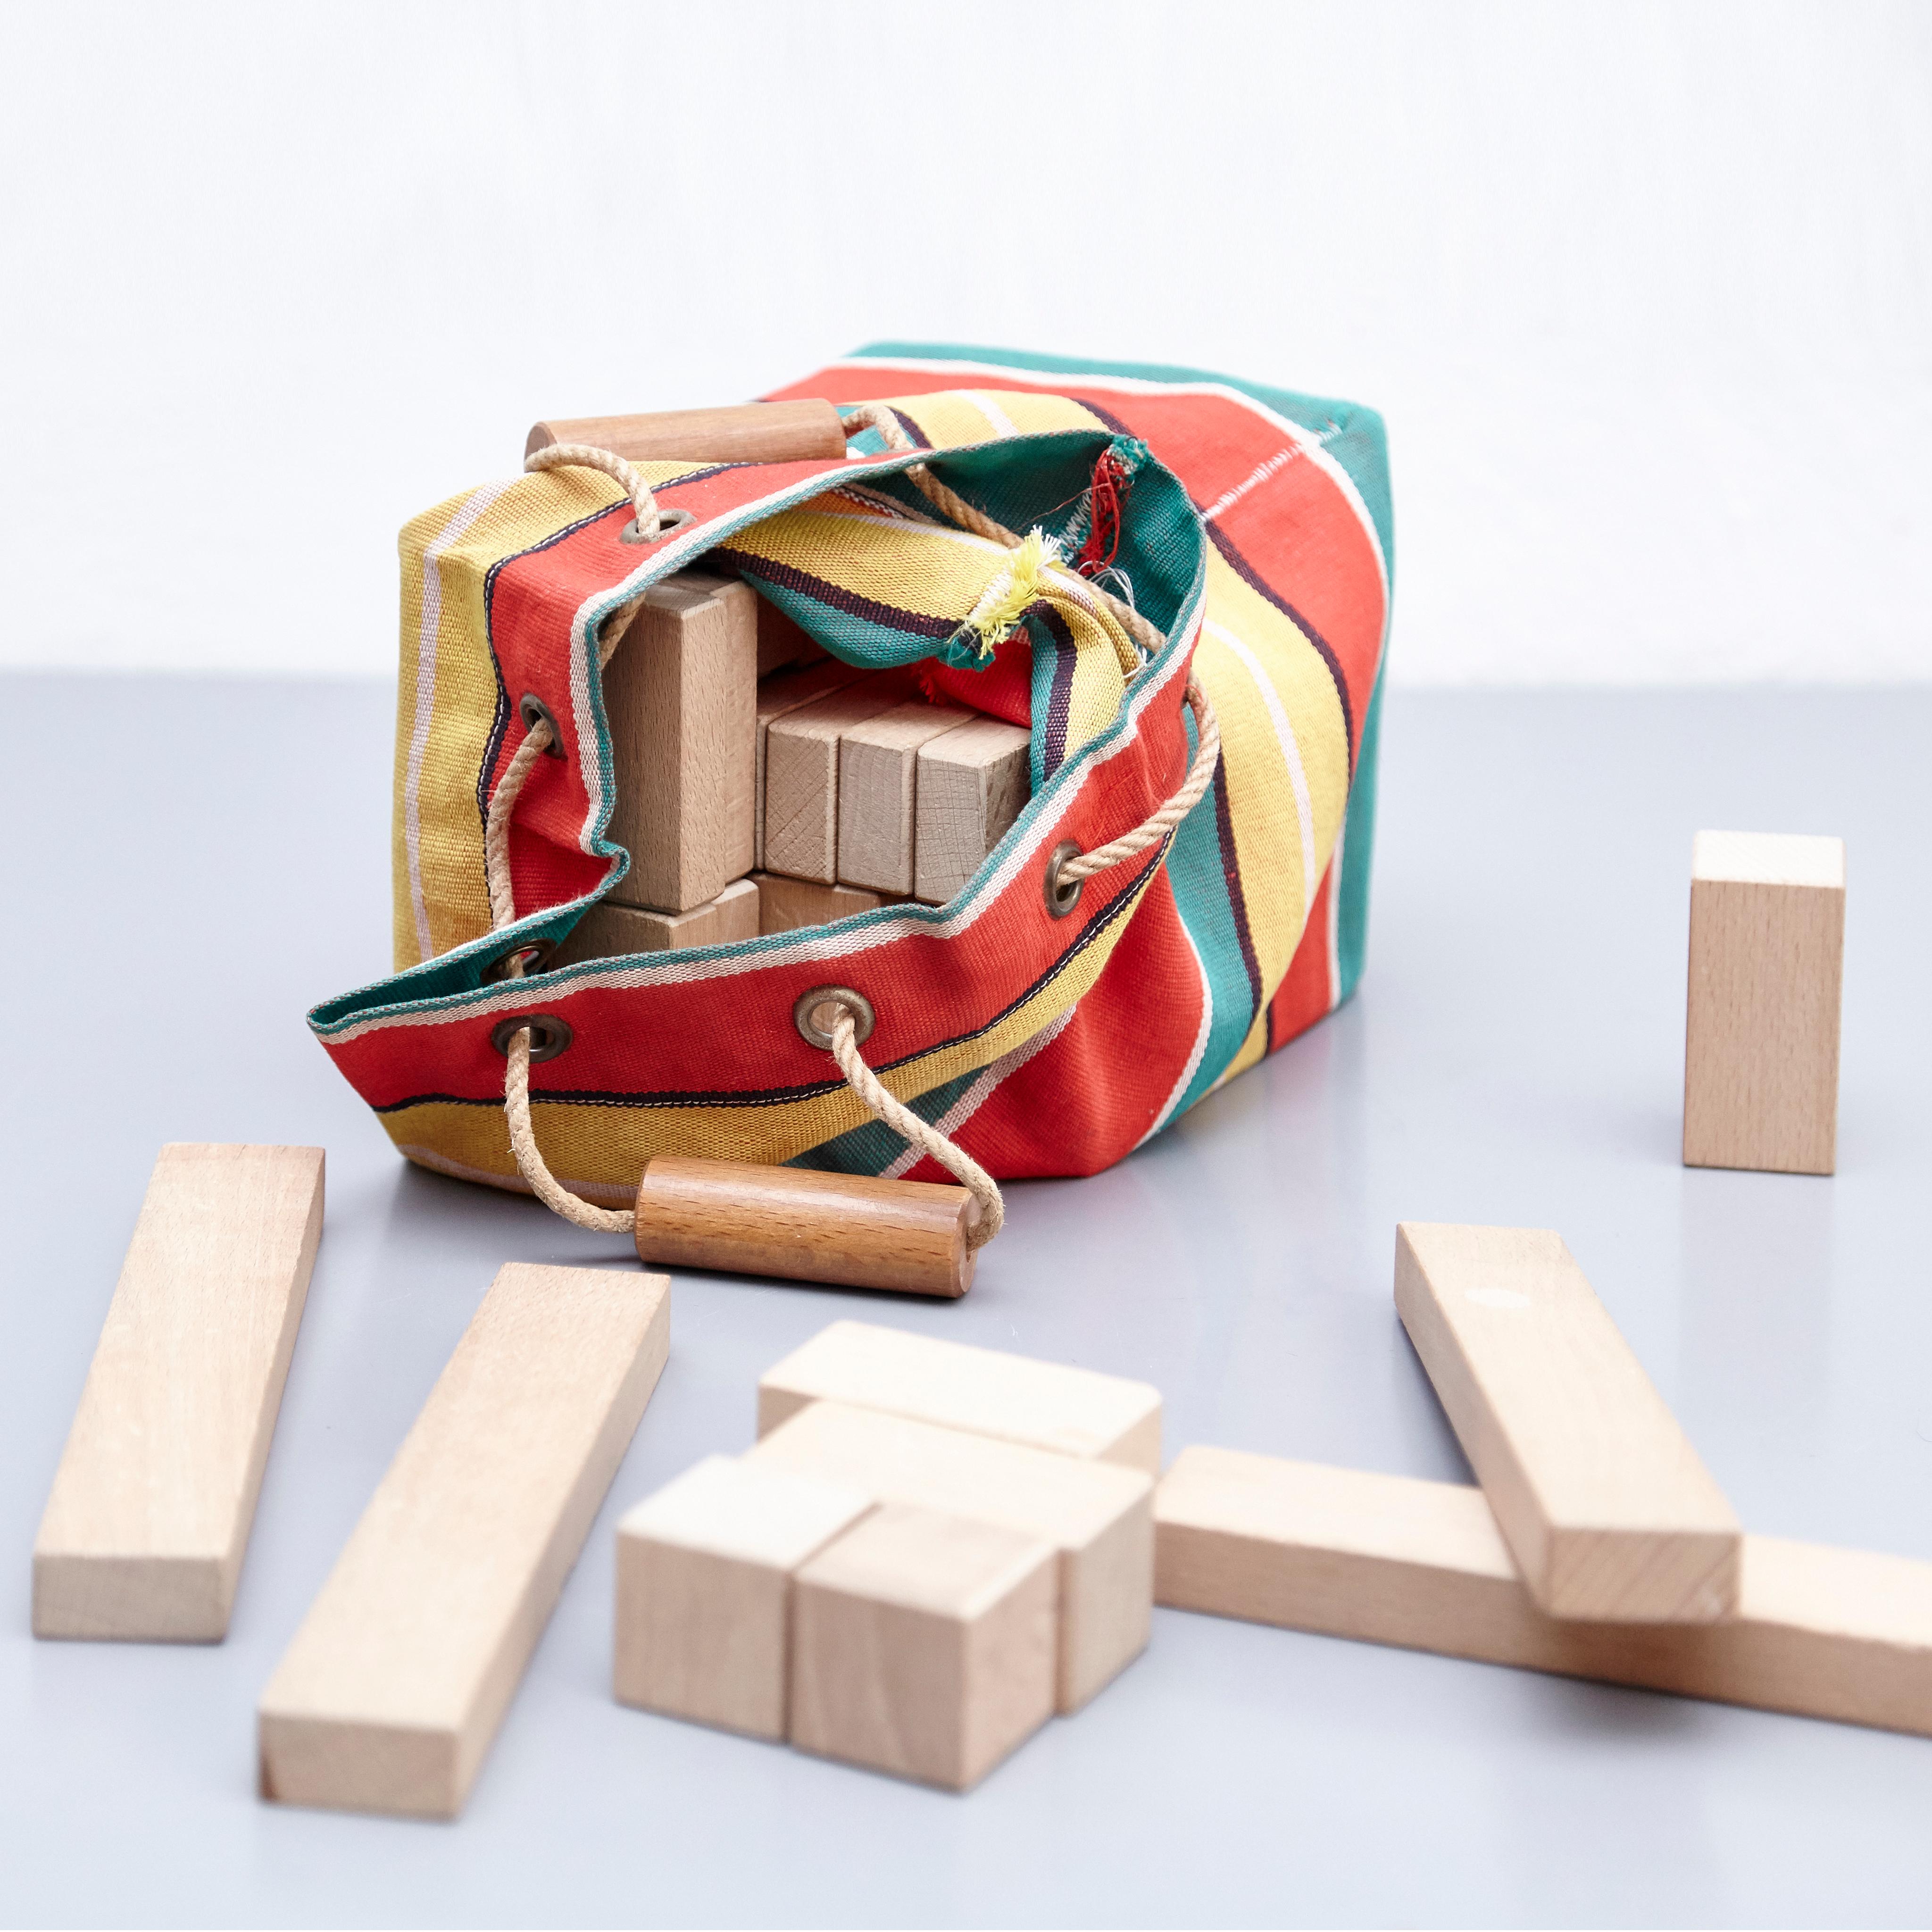 Ko Verzuu for Ado, Mid Century Modern, Wood Blocks Construction Netherlands Toy  1